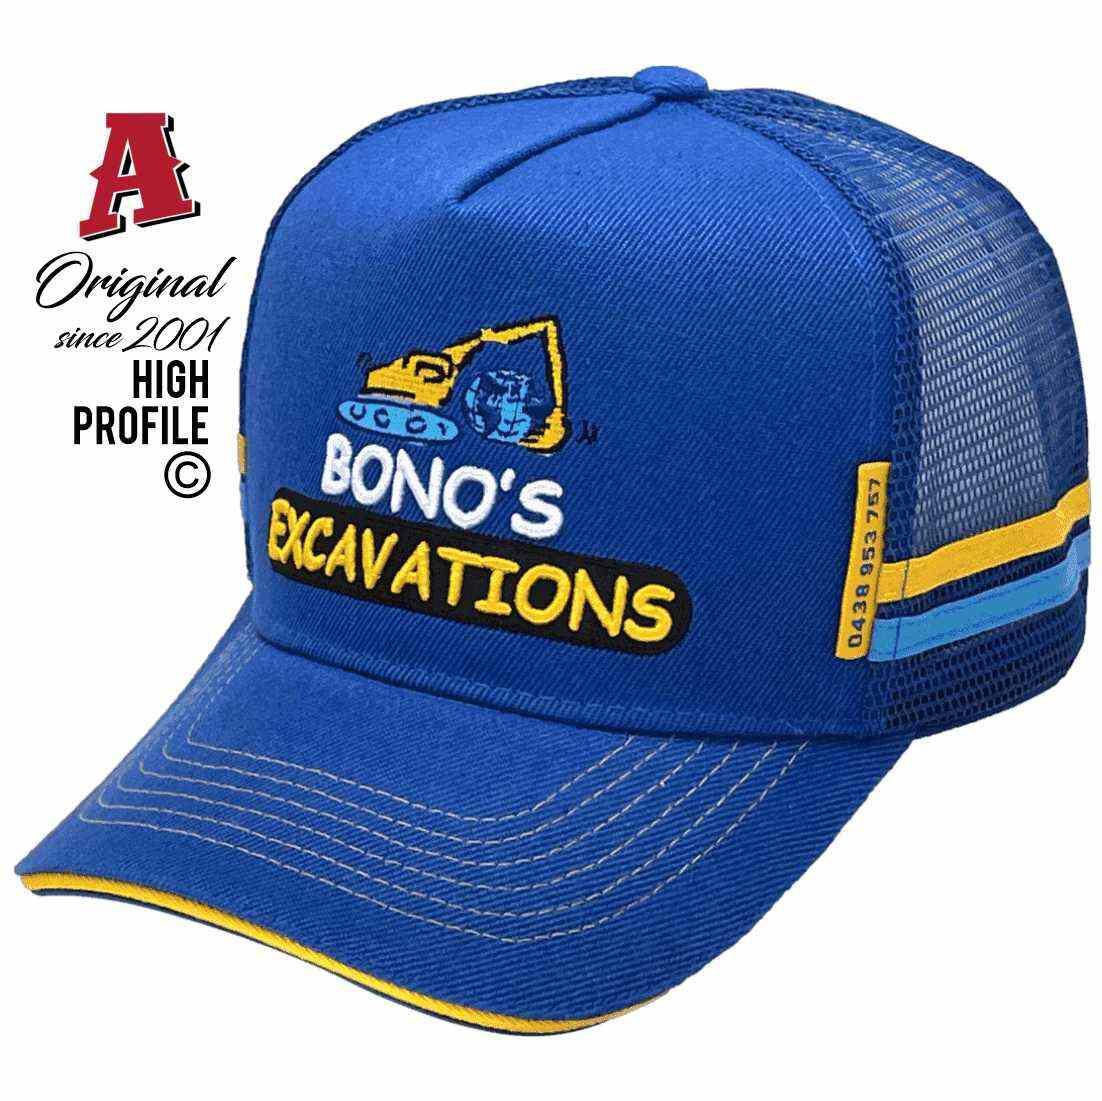 Bonos Excavations Kairi QLD Power Aussie Trucker Hats with Australian HeadFit Crown Double SideBands Royal Gold Snapback